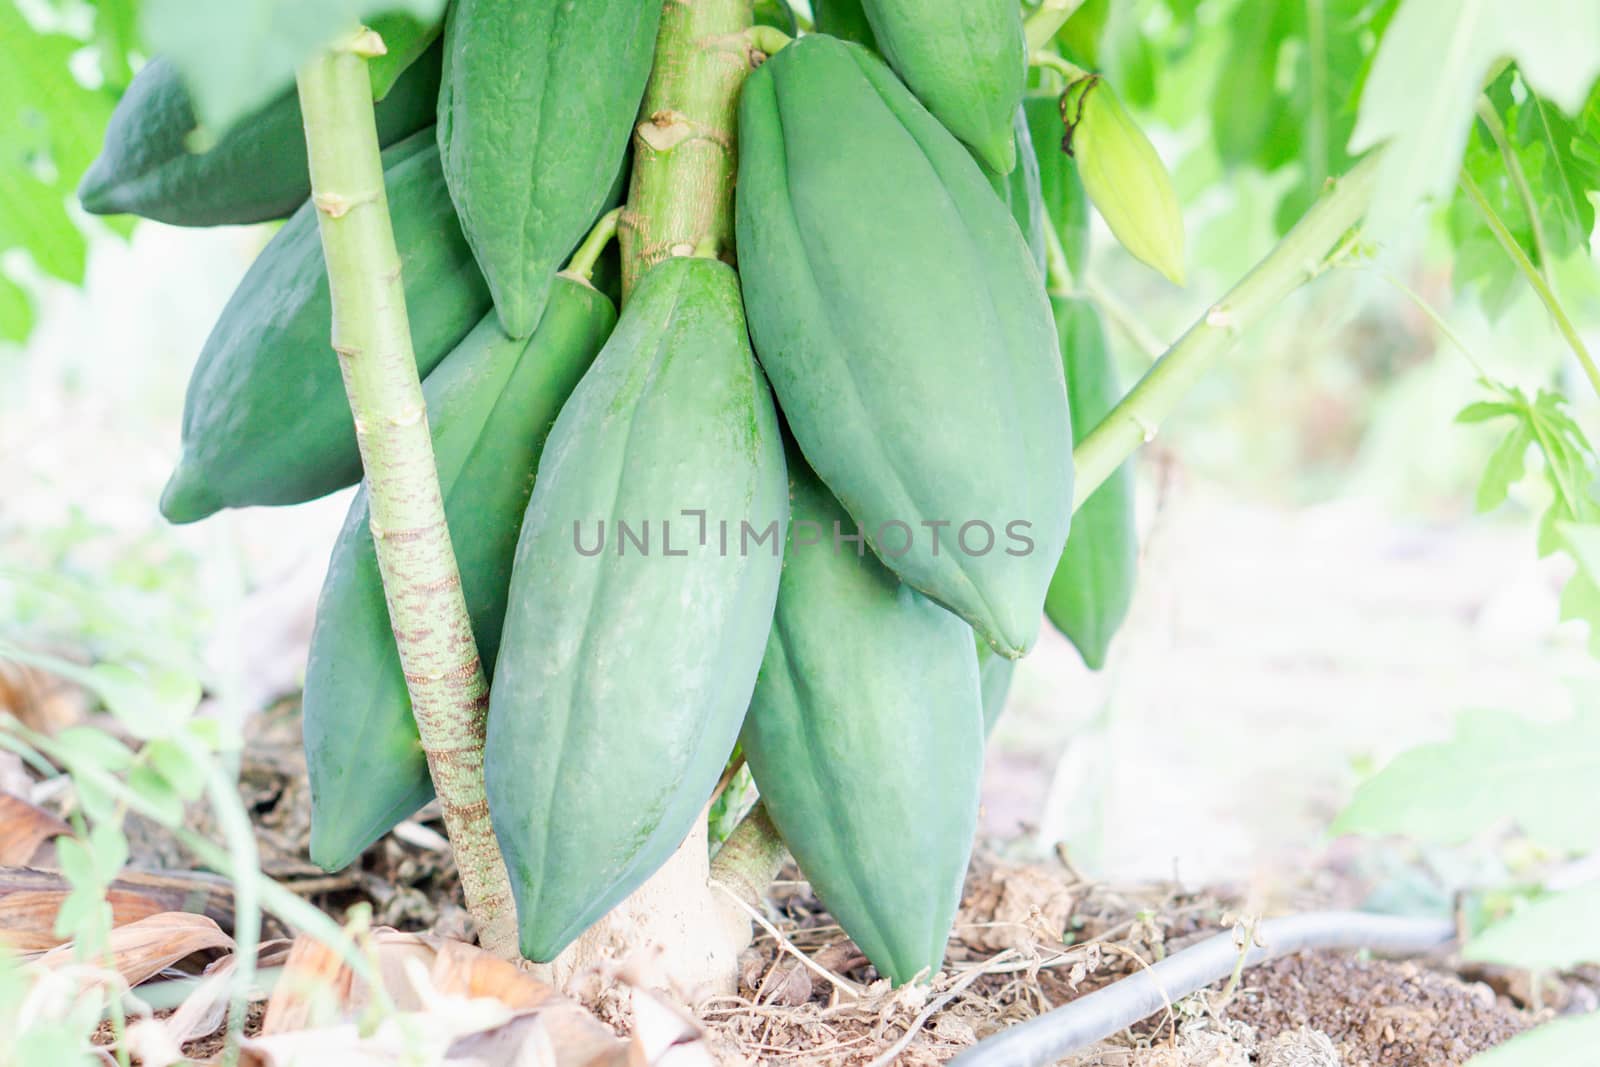 Green papaya fruit on tree branch by pt.pongsak@gmail.com